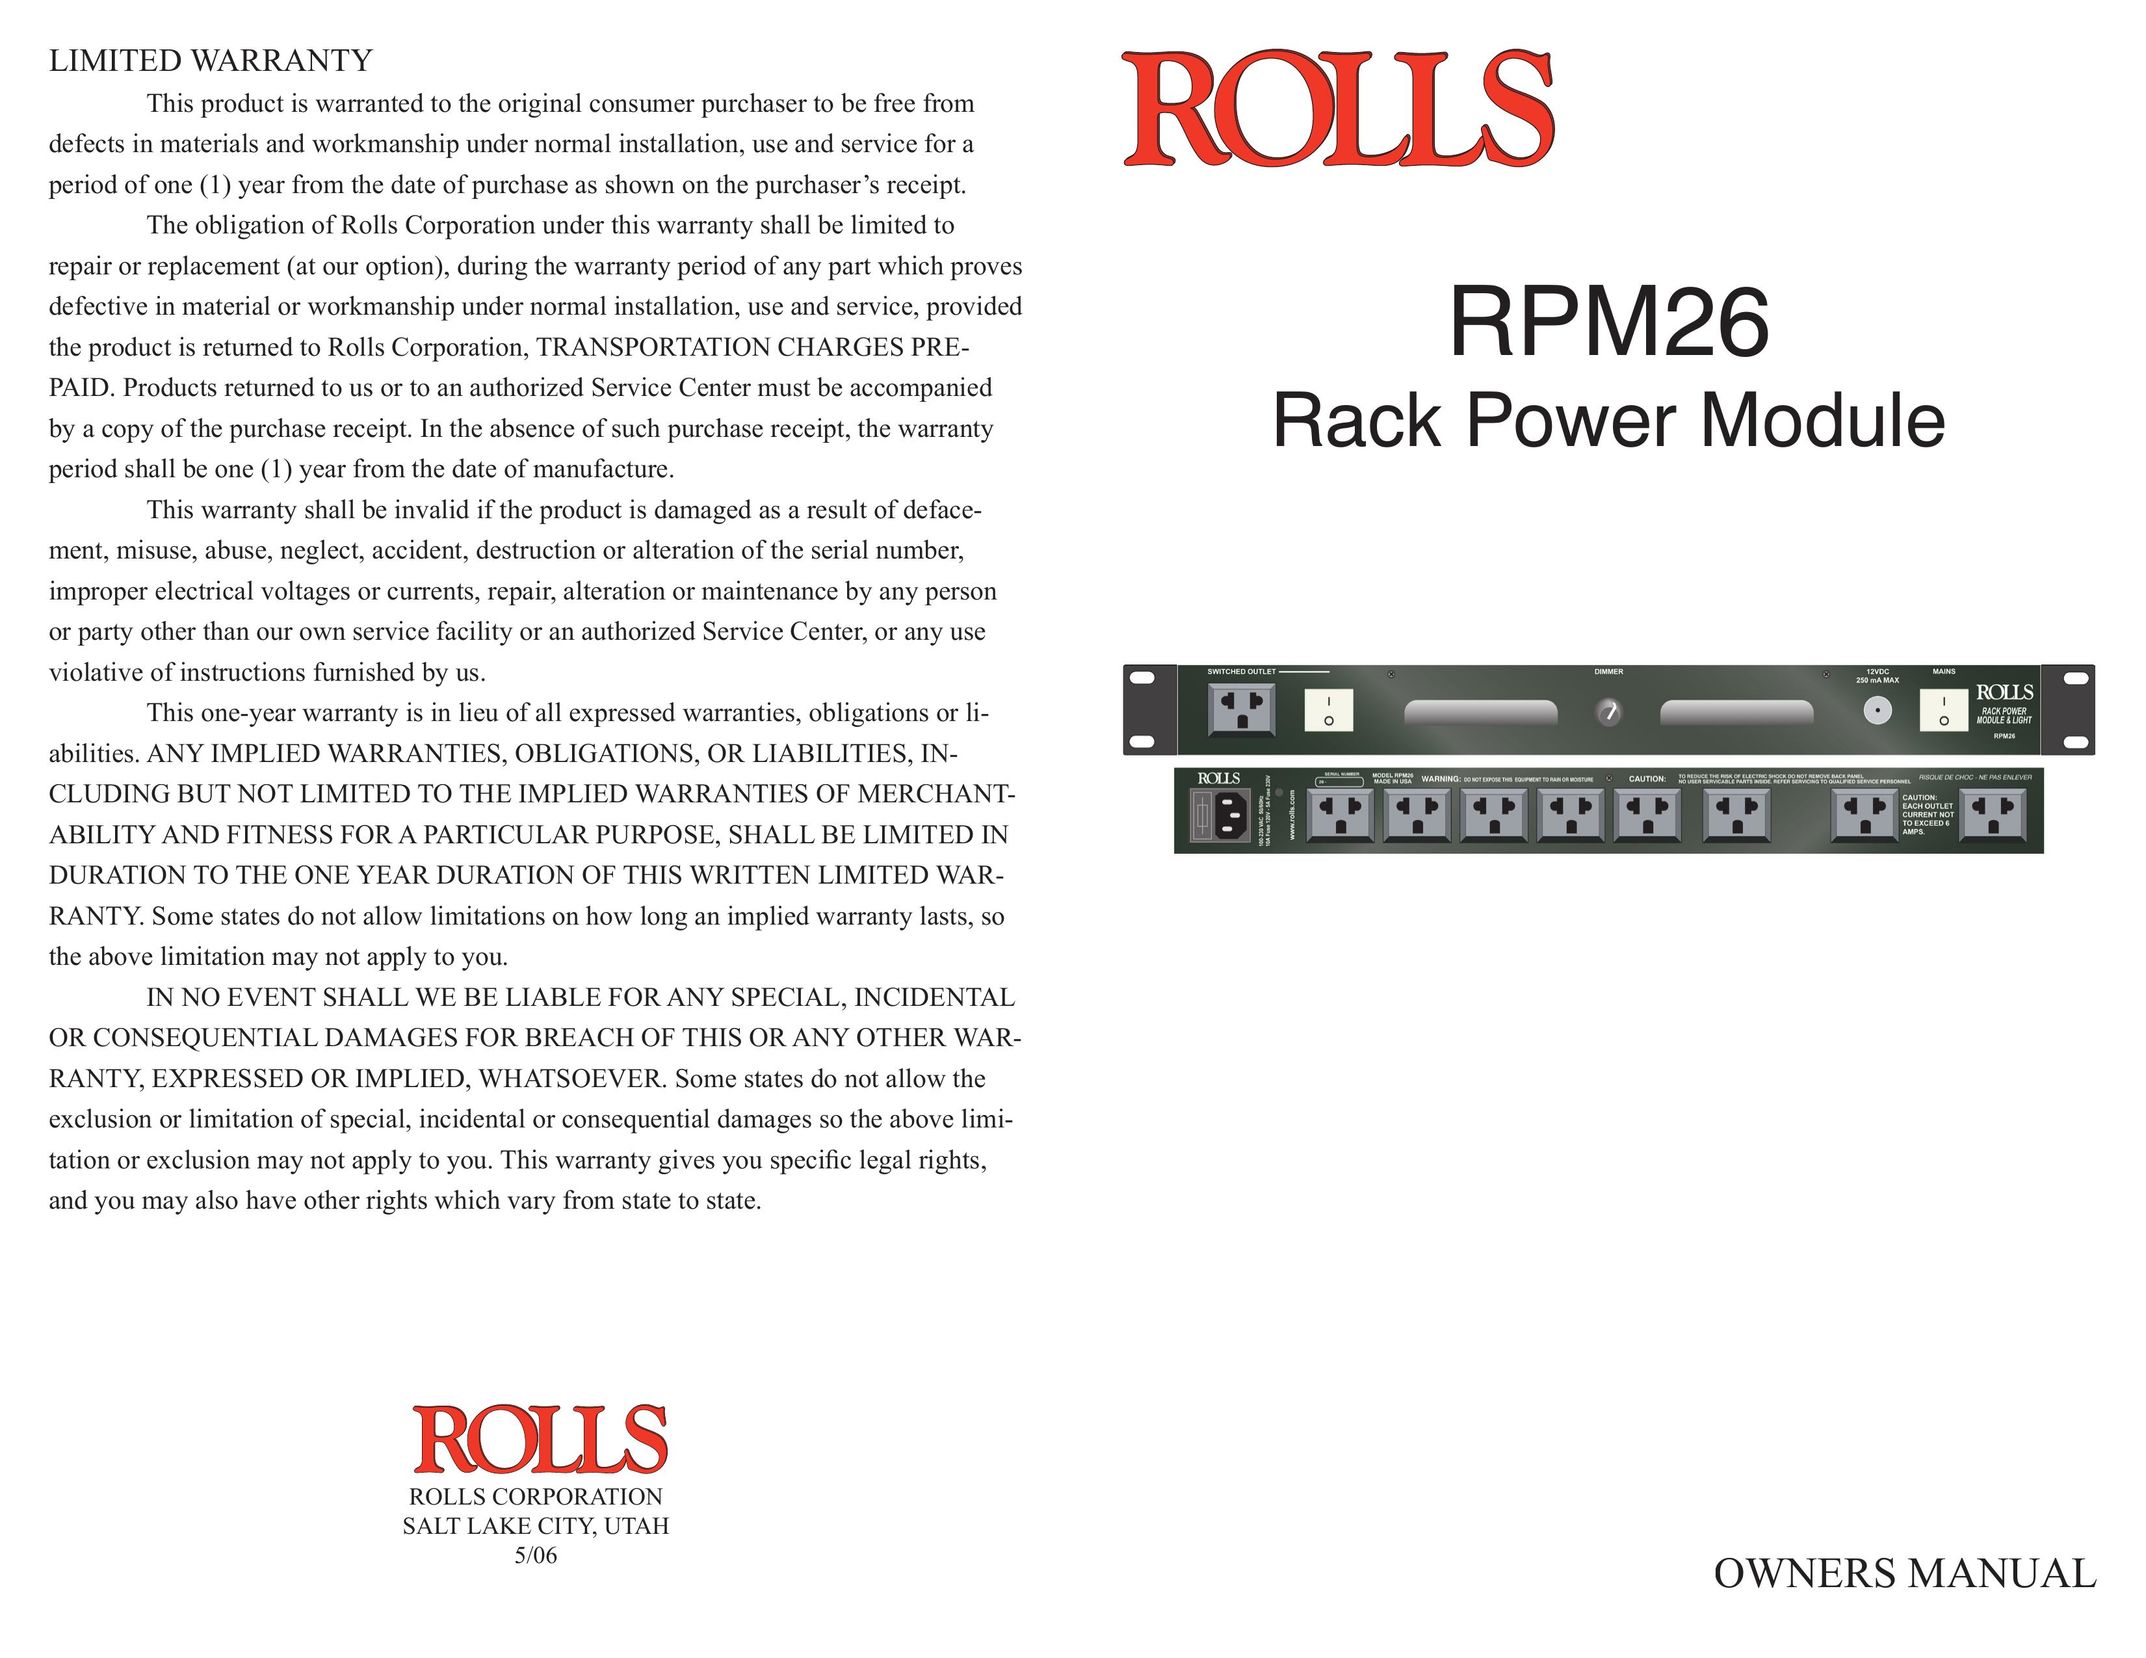 Rolls RPM26 Network Card User Manual